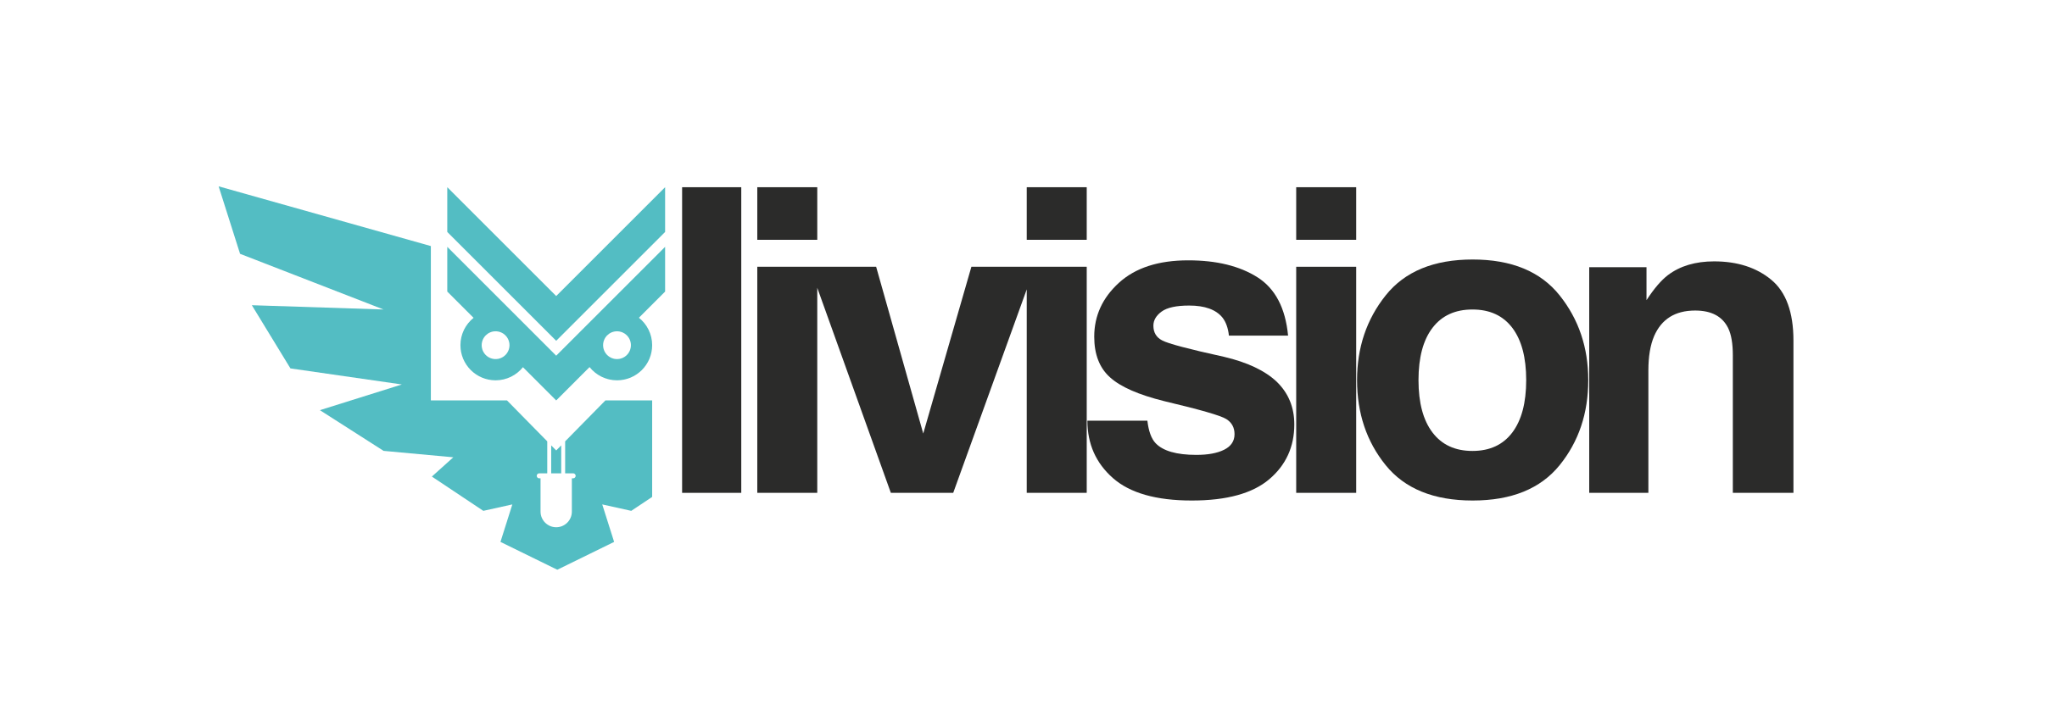 Livision GmbH